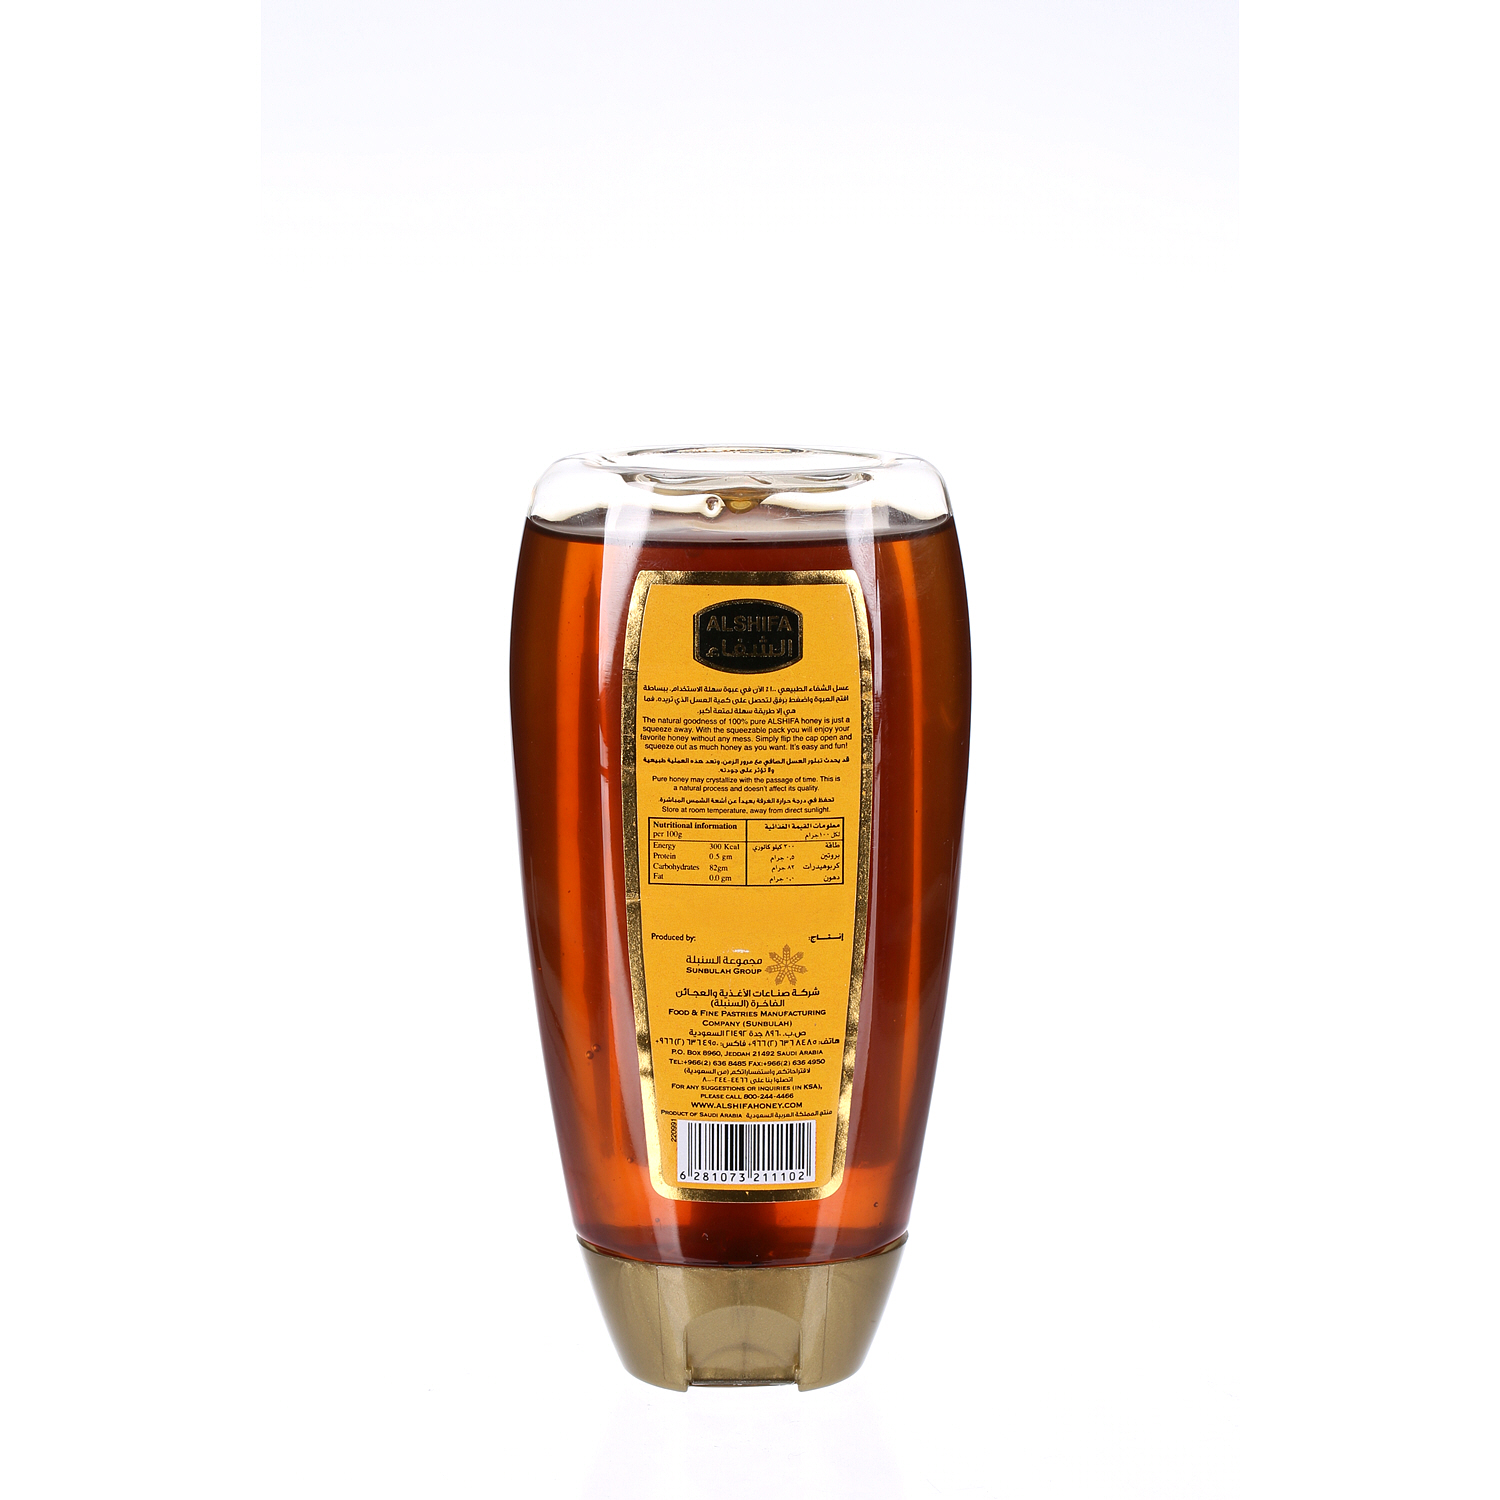 Al Shifa Honey Natural Squeez Bottle 400 g